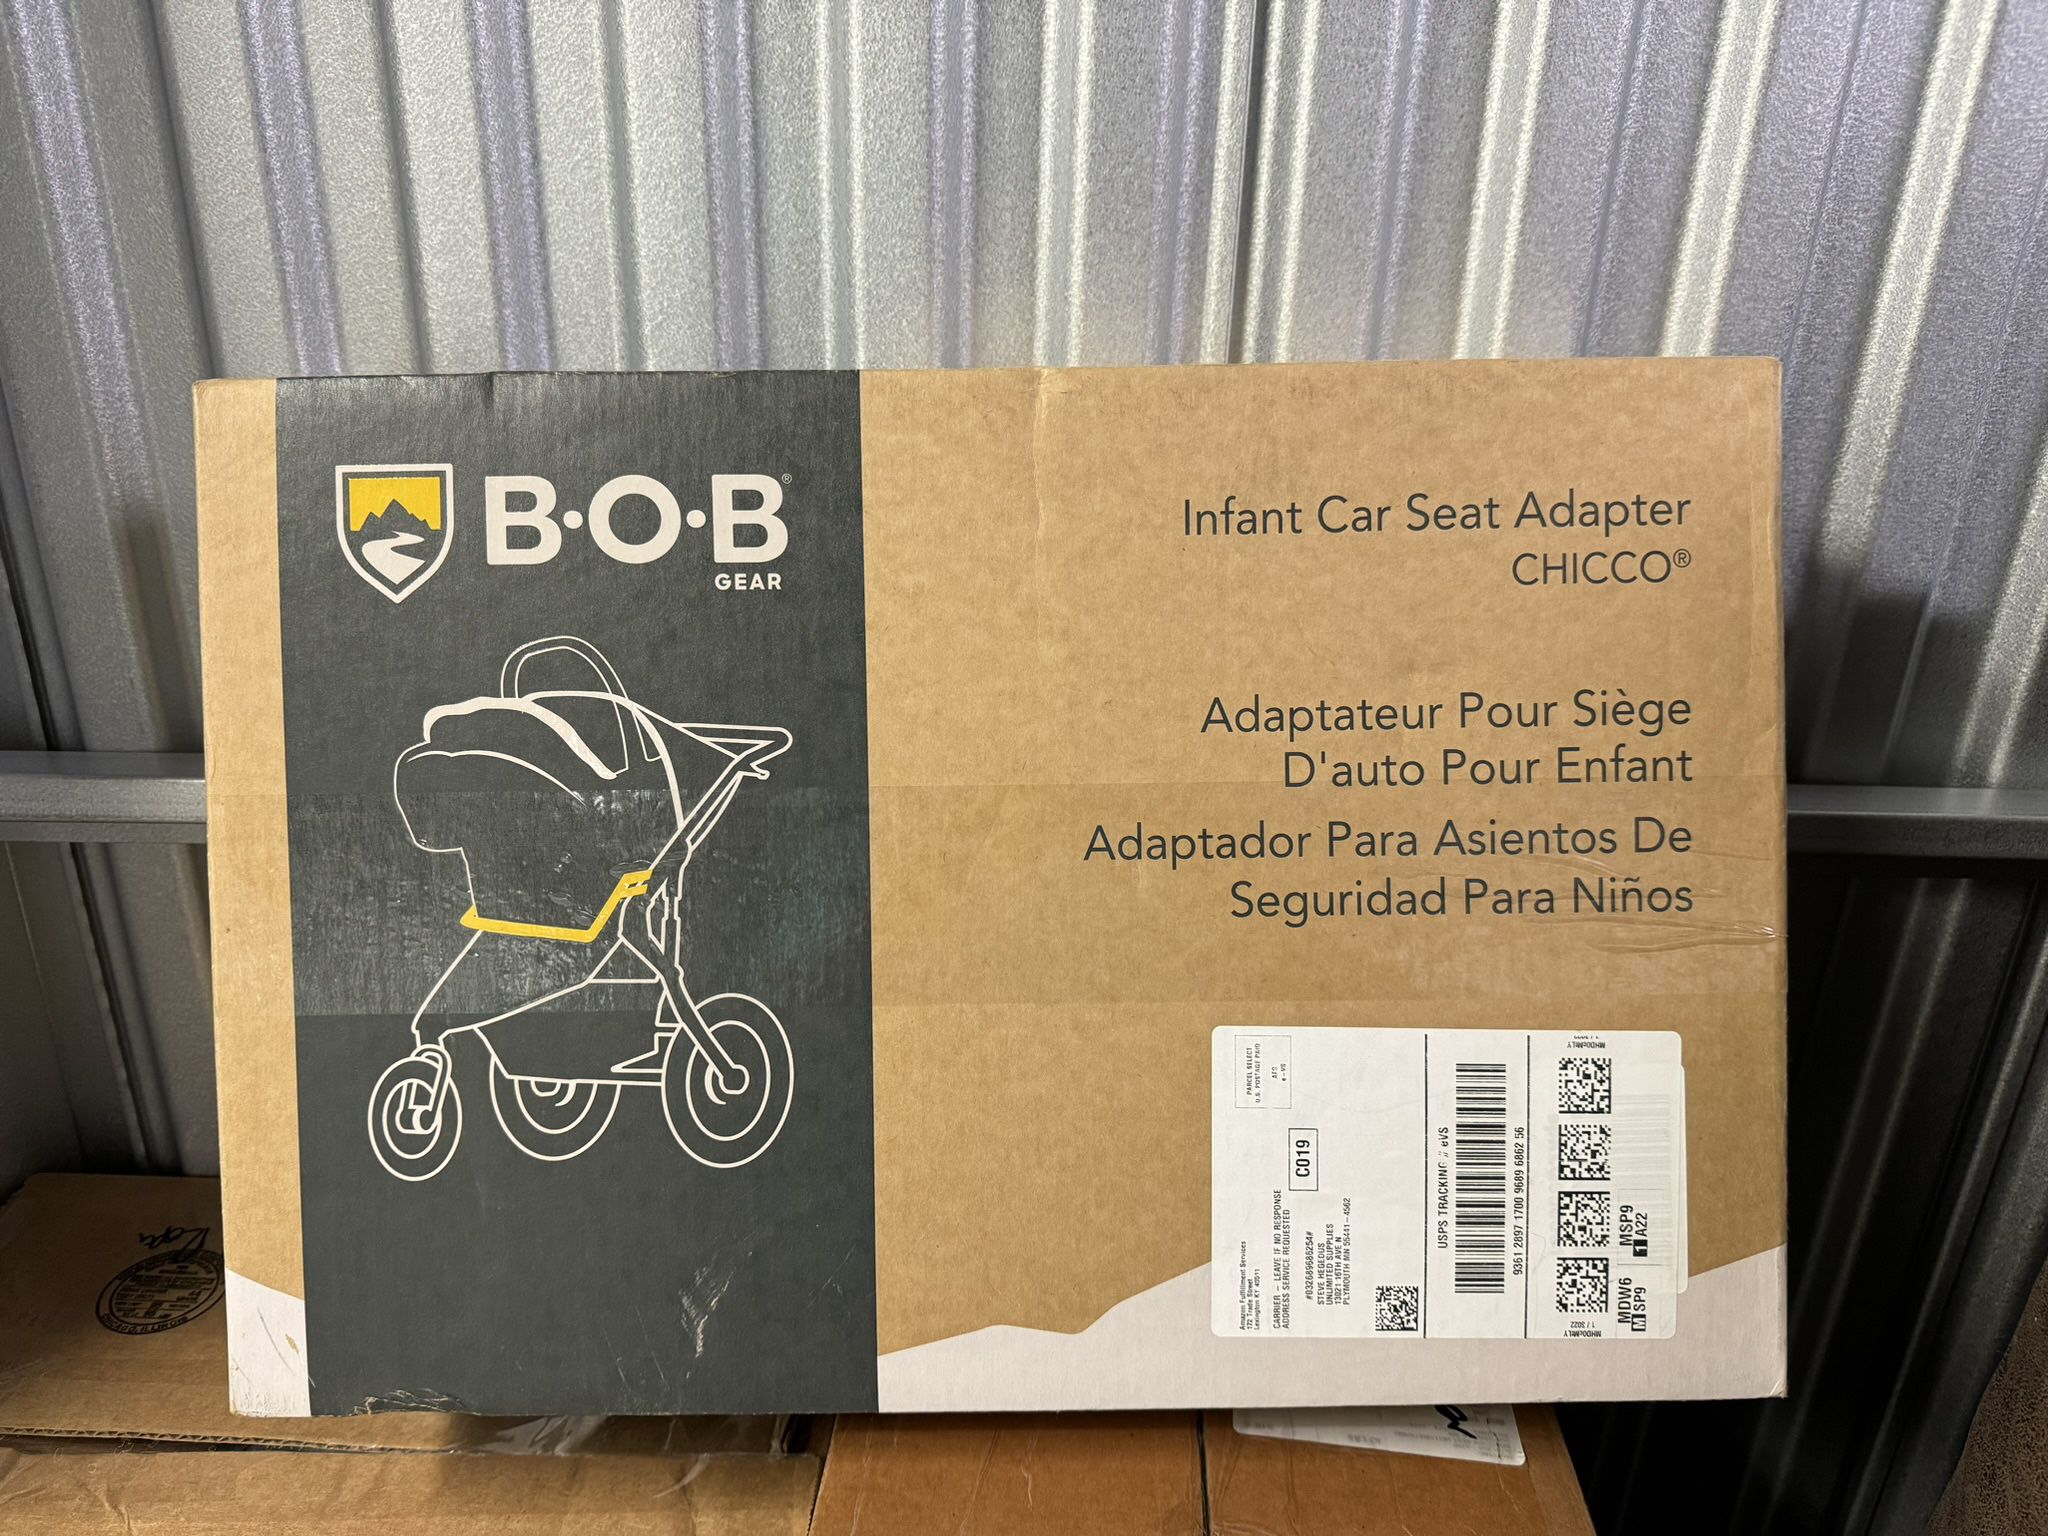 Car Seat Adapter For B.O.B. Gear 